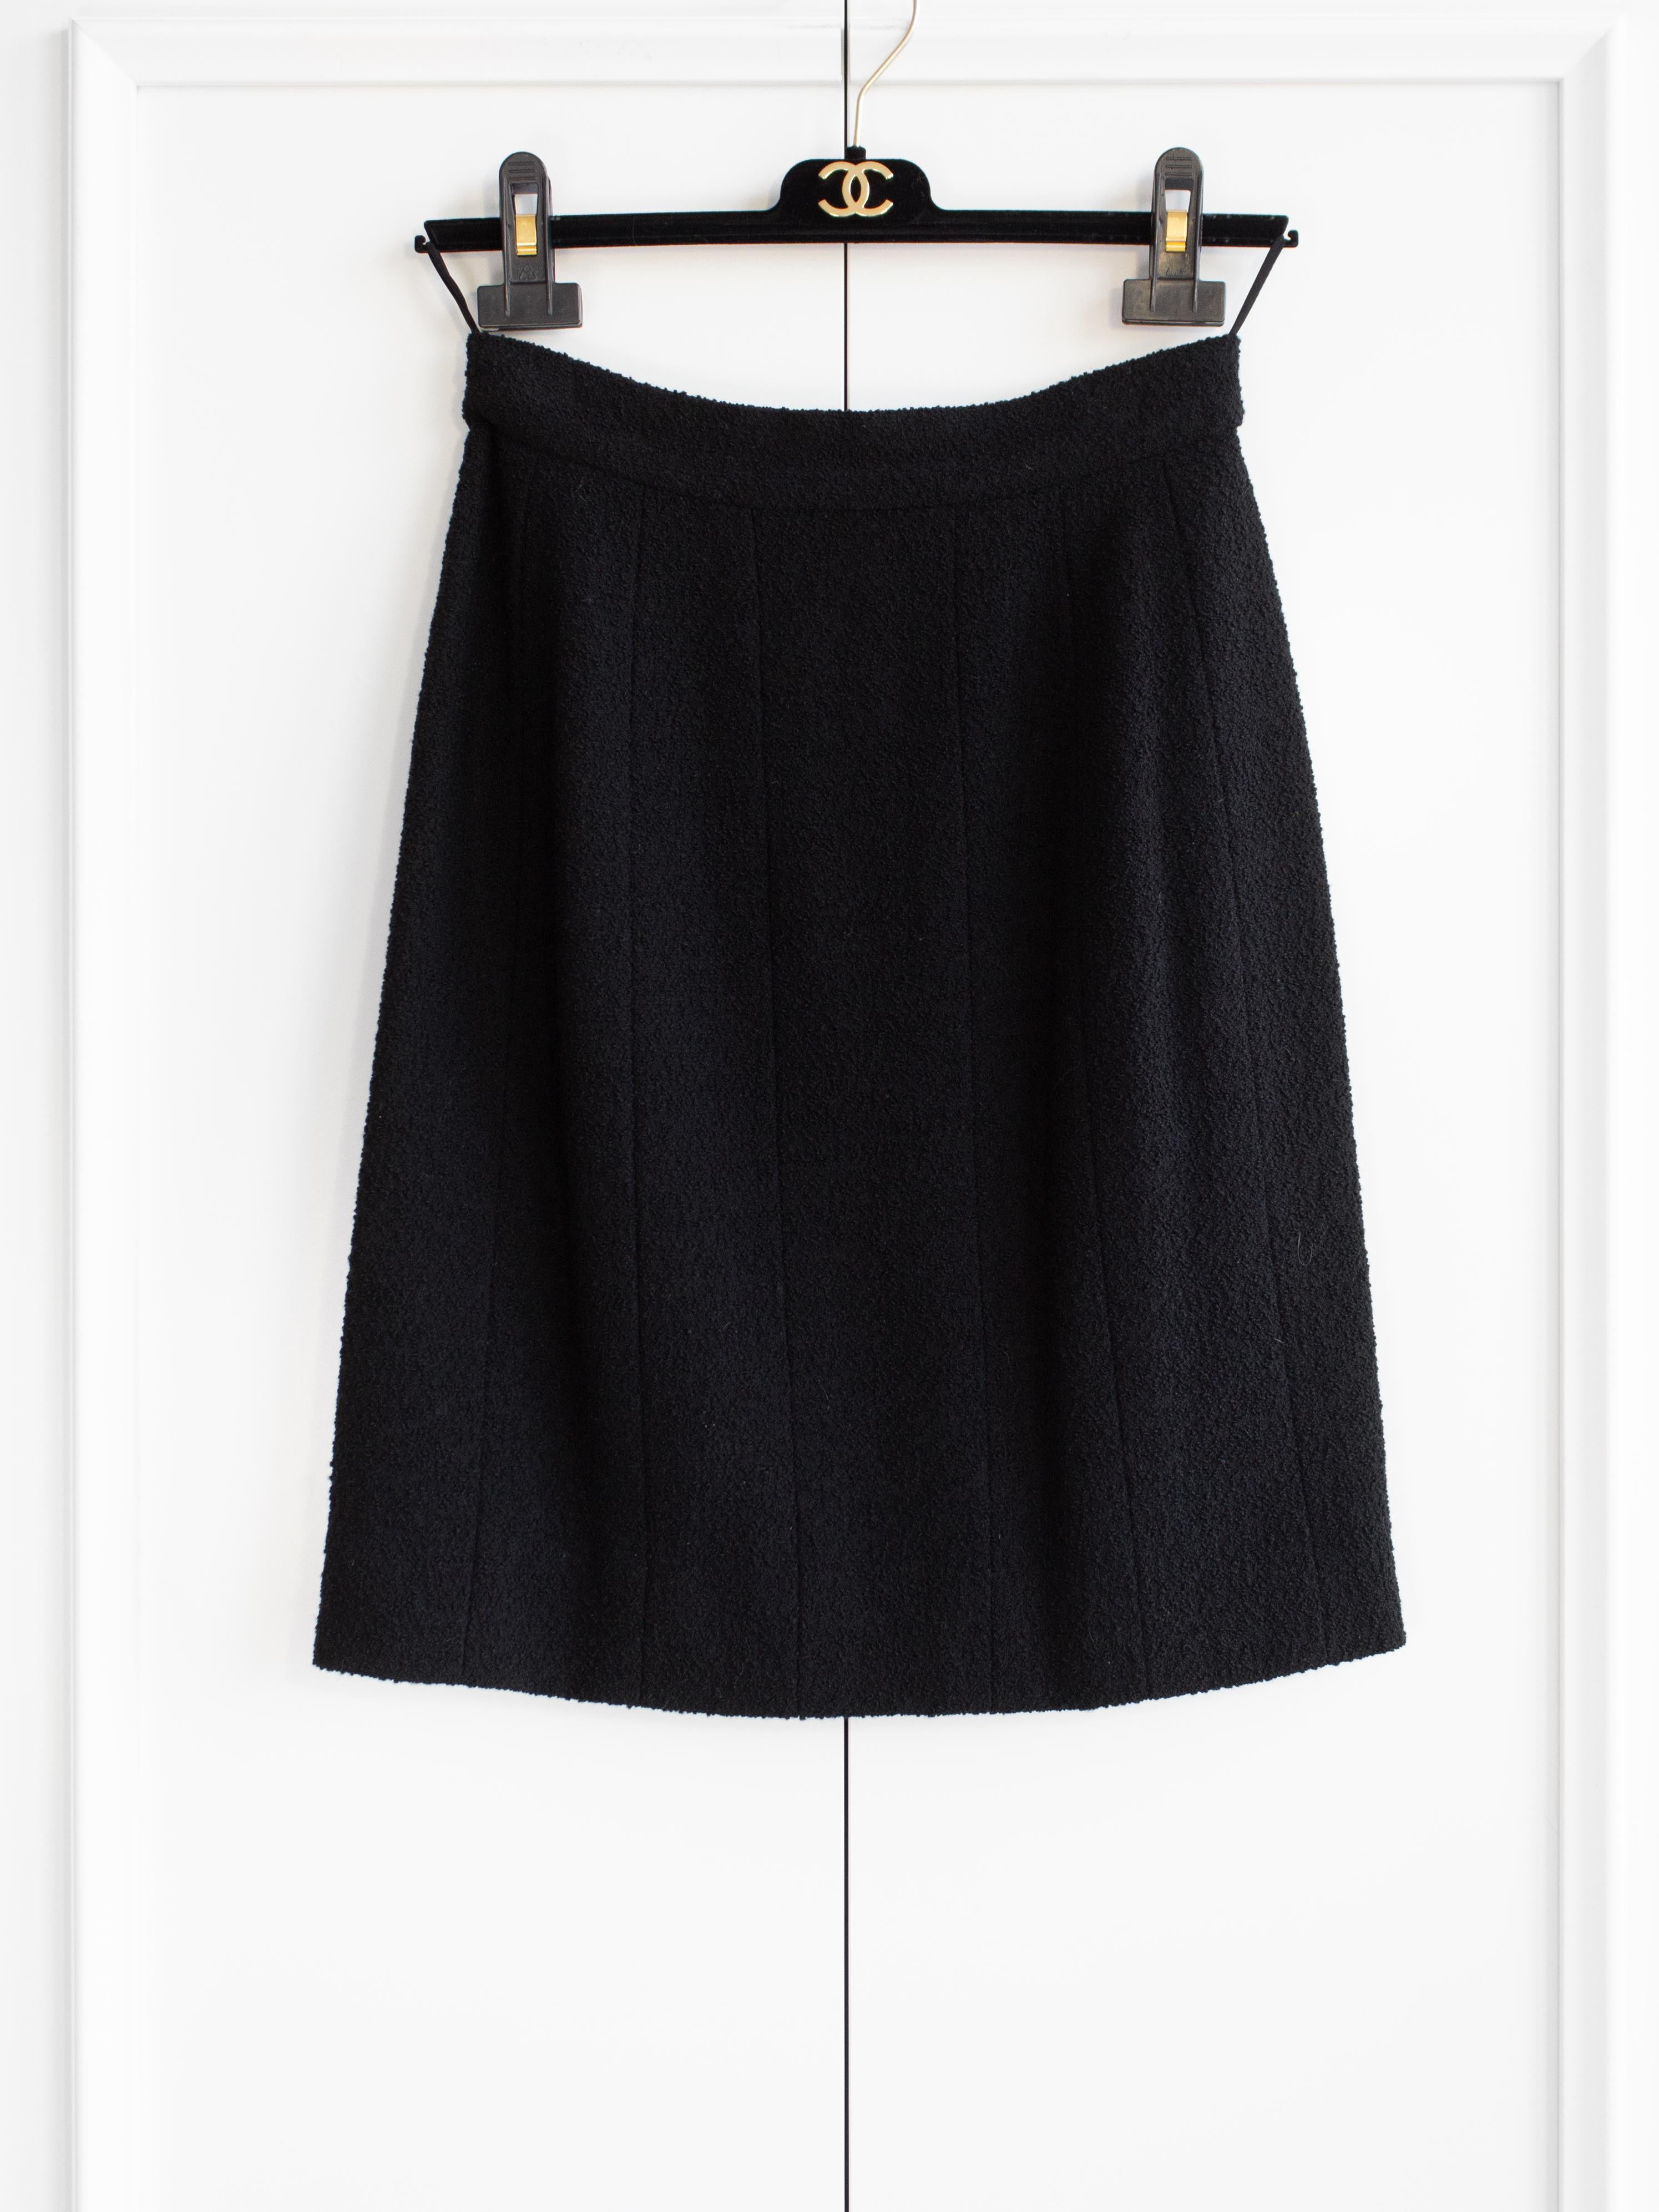 Chanel Vintage Haute Couture S/S 1995 Black White CC Tweed Jacket Skirt Suit 14